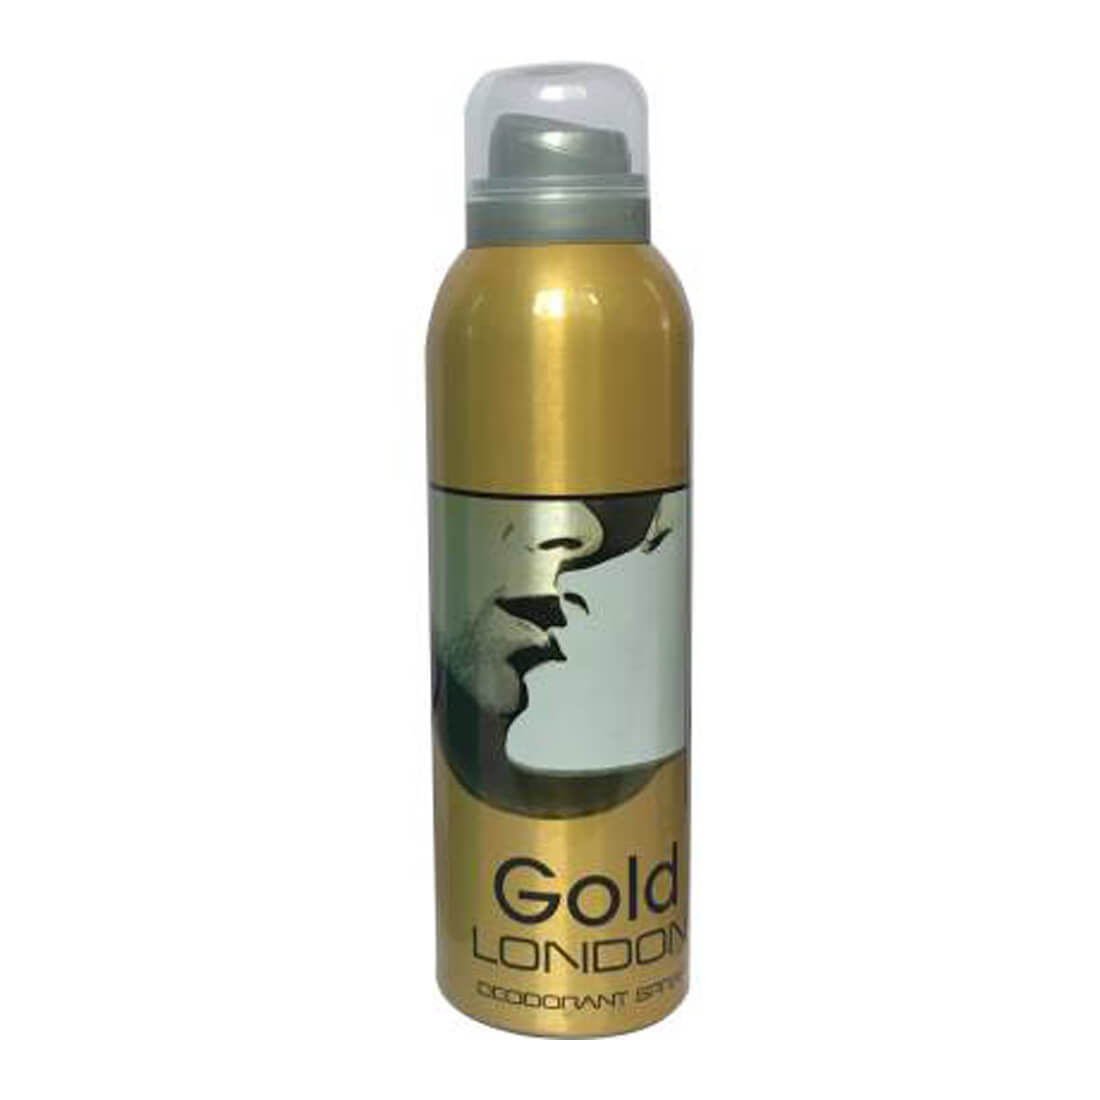 London Gold Deodorant Body Spray 200ml